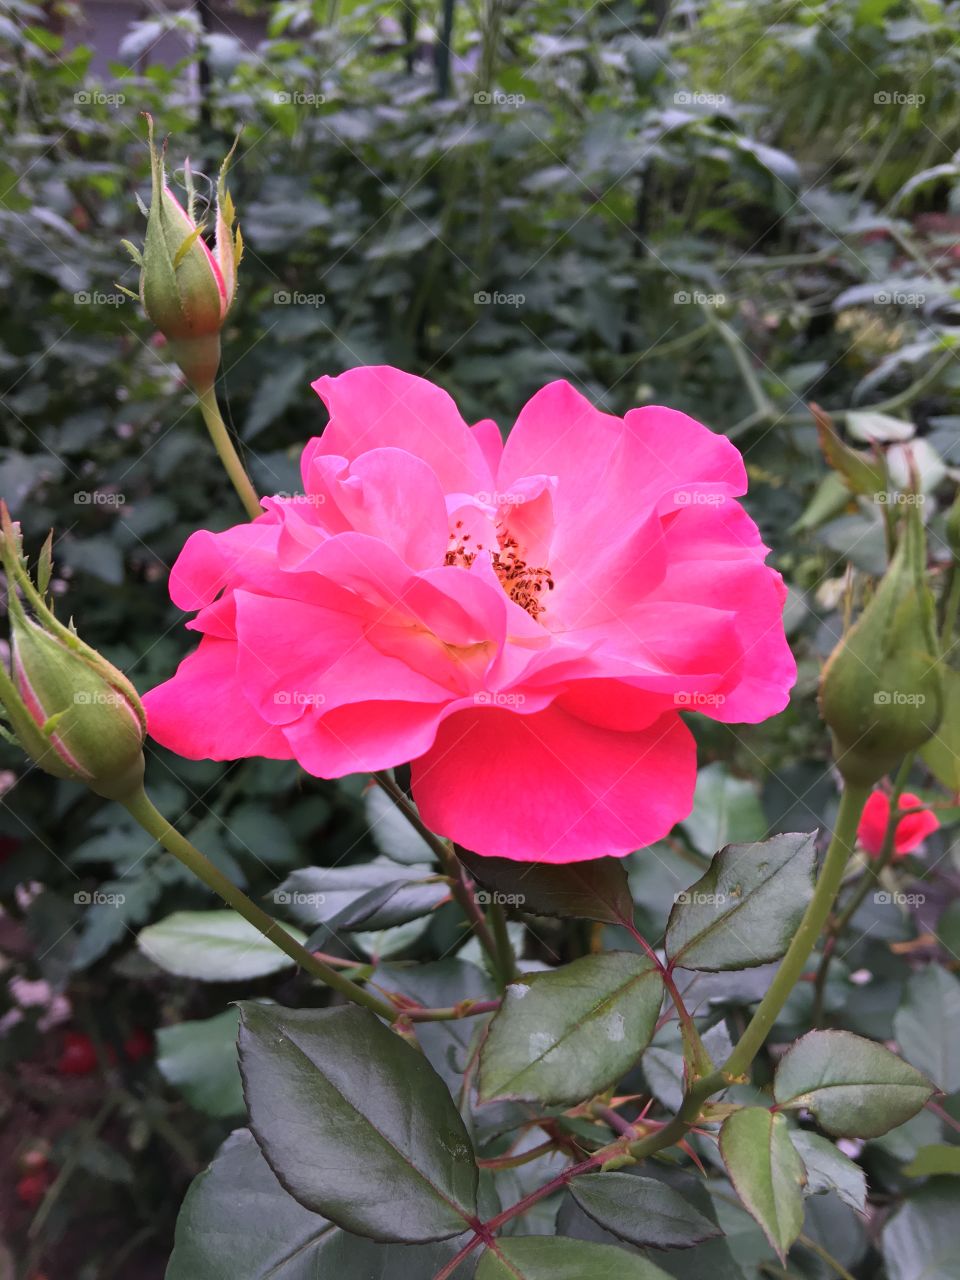 Fall rose blooming in a backyard garden🌹